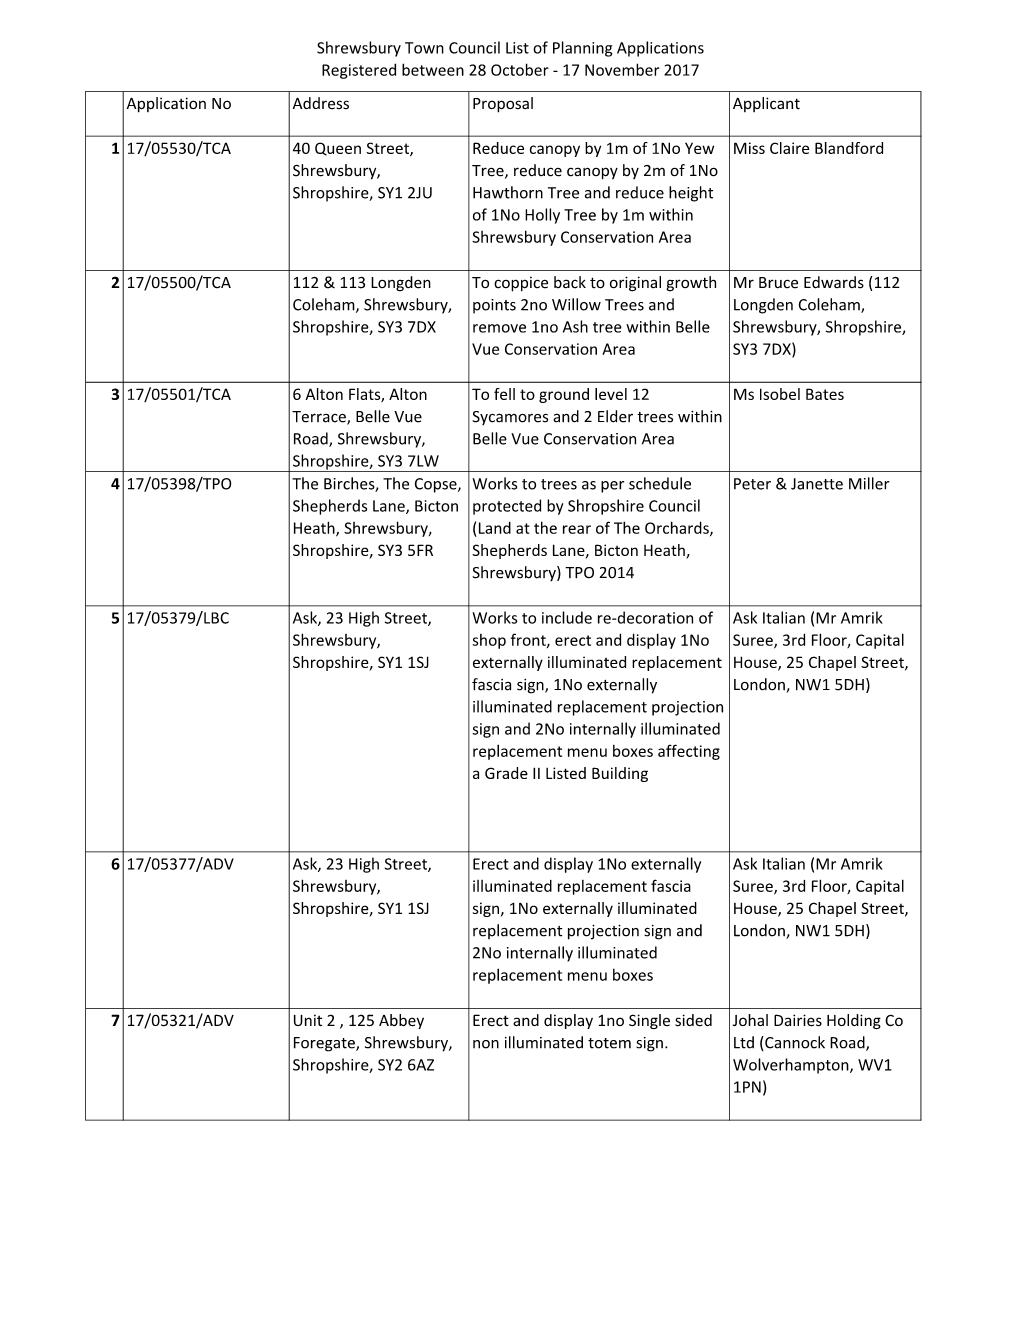 Shrewsbury Town Council List of Planning Applications Registered Between 28 October - 17 November 2017 Application No Address Proposal Applicant